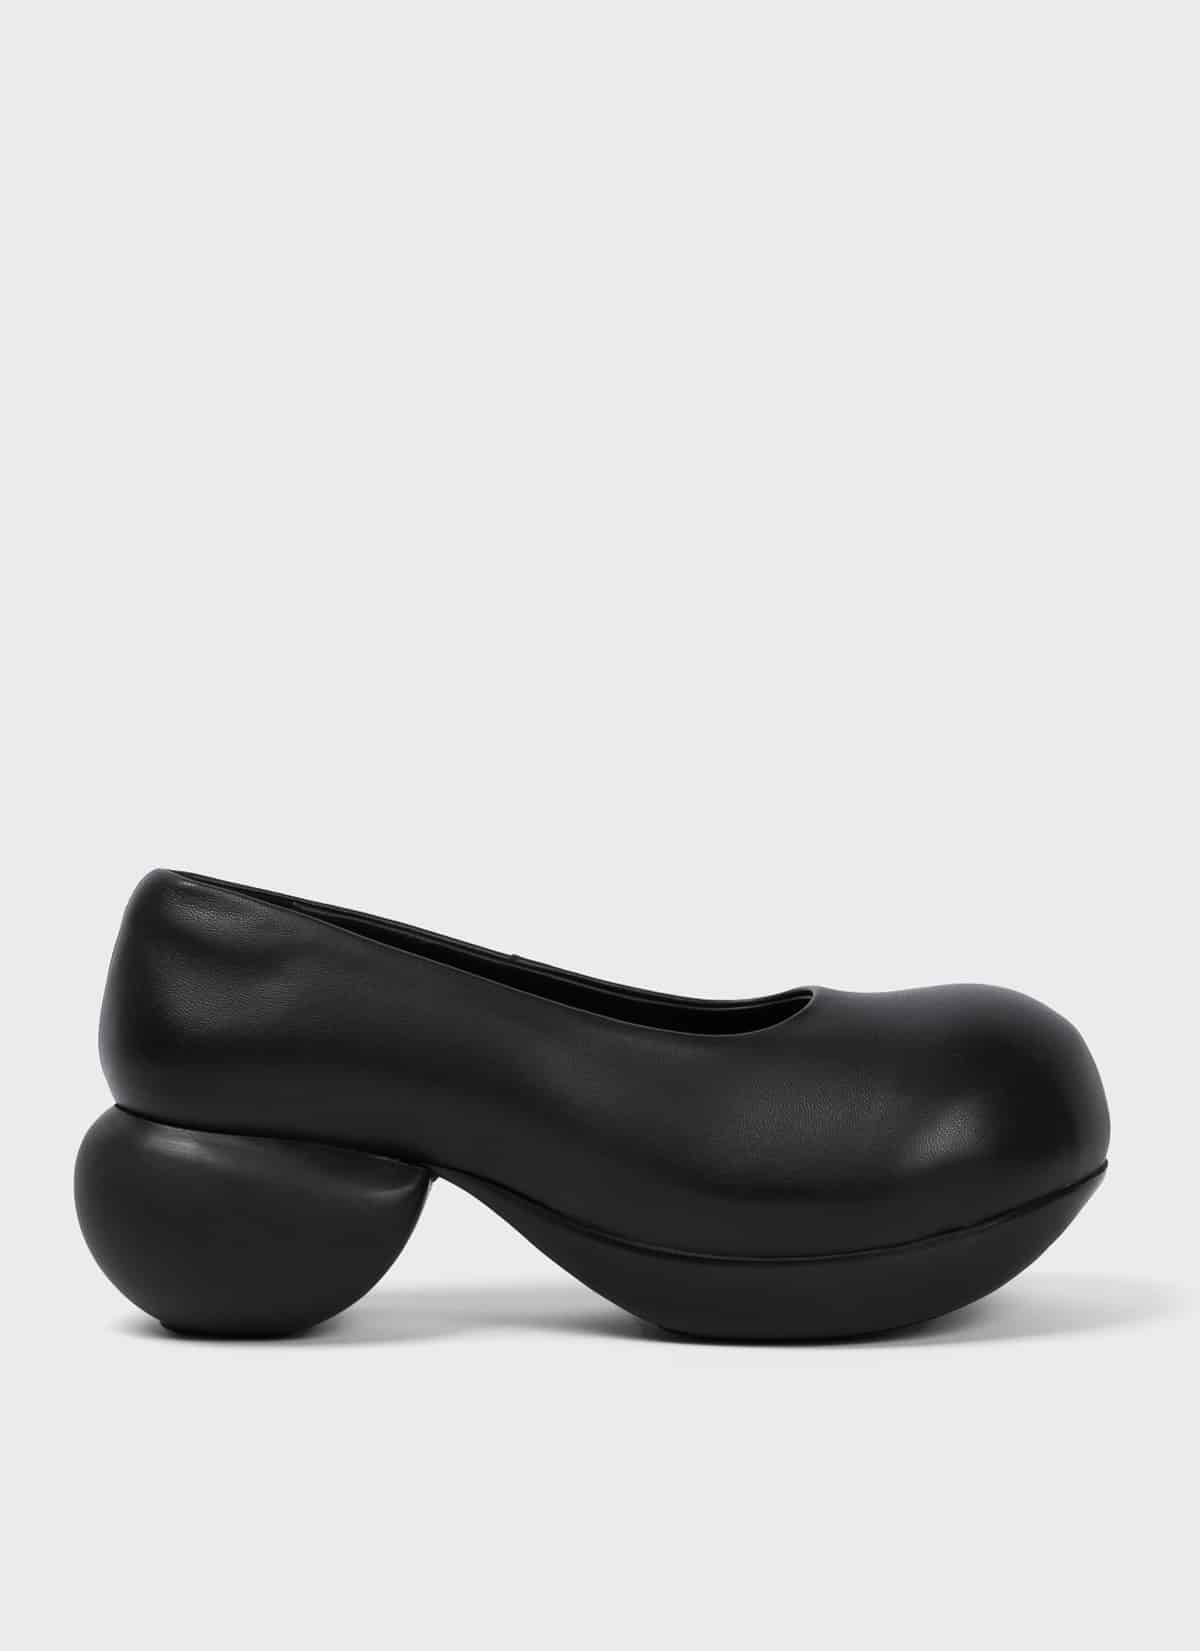 VeniceW Bobtail Shoes Black